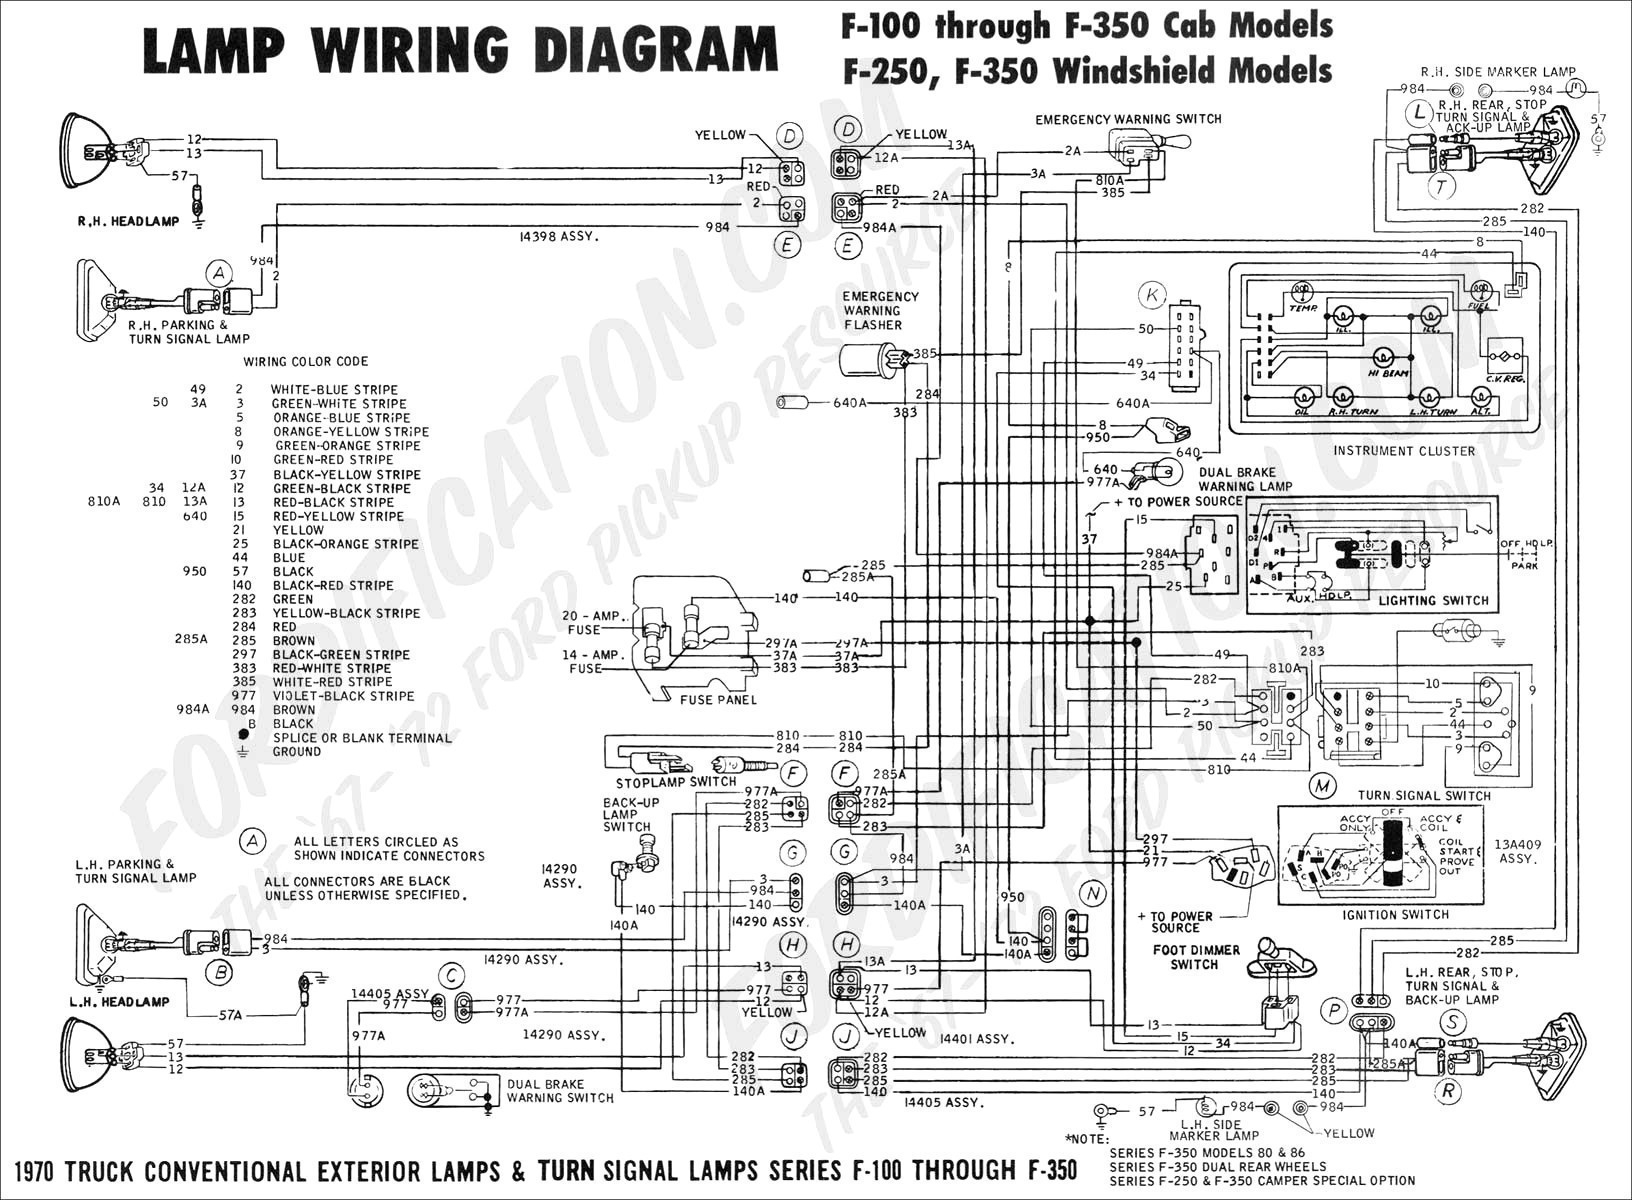 Lutron 3 Way Switch Wiring Diagram Lutron 3 Way Diagram Wiring Diagrams Home